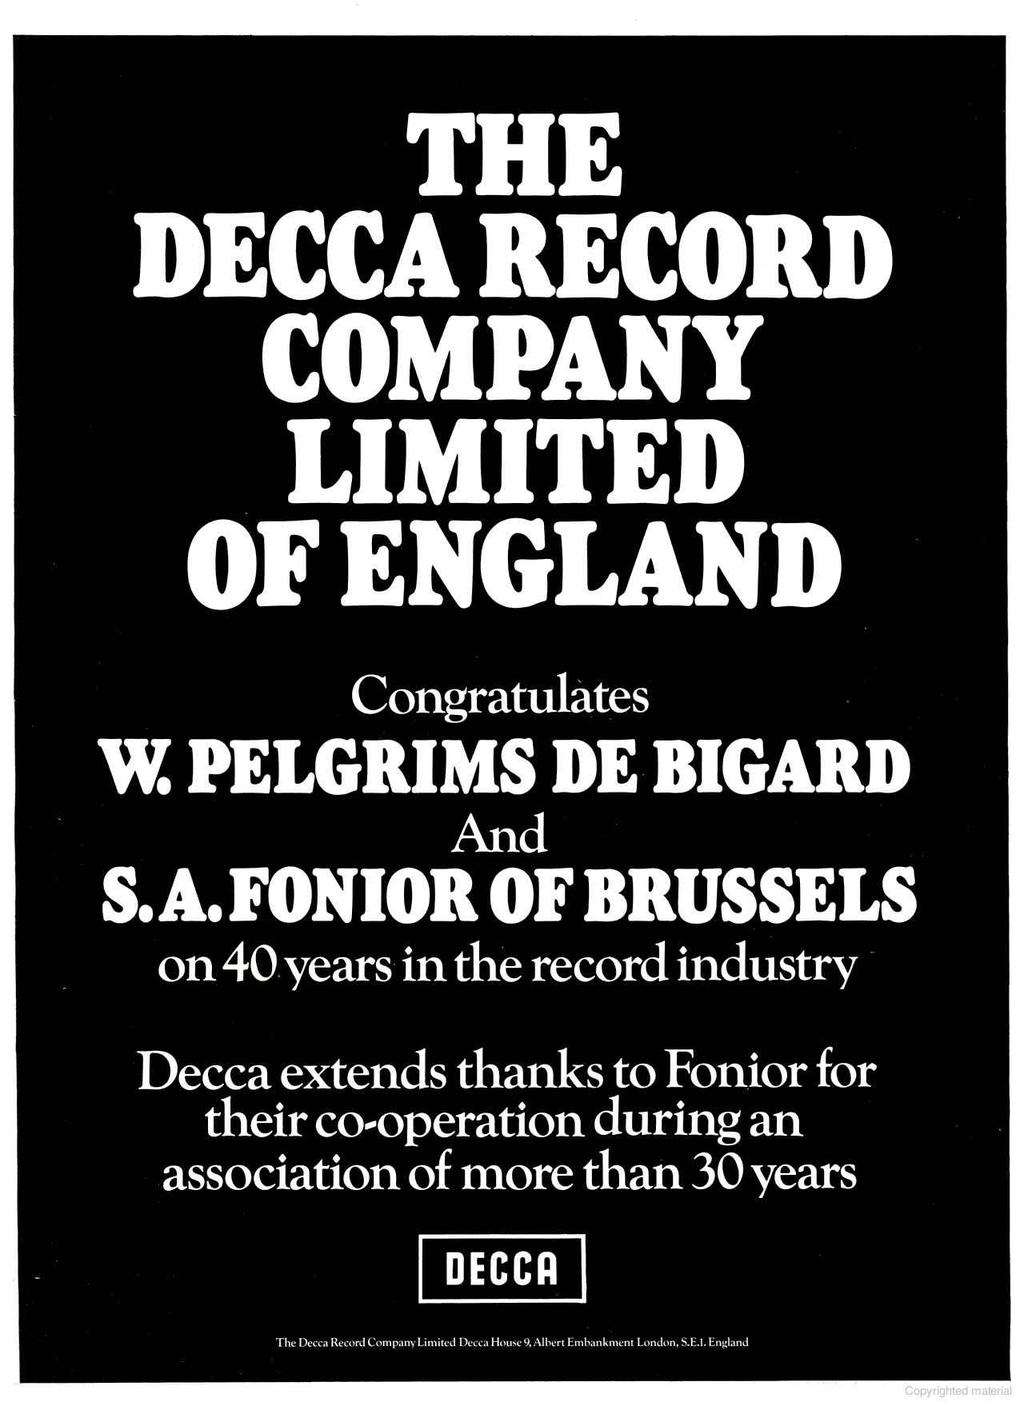 THE DECCA RECORD COMPANY LIMITED OF ENGLAND Congratulates W. PELGRIMS DE BIGARD And SA.